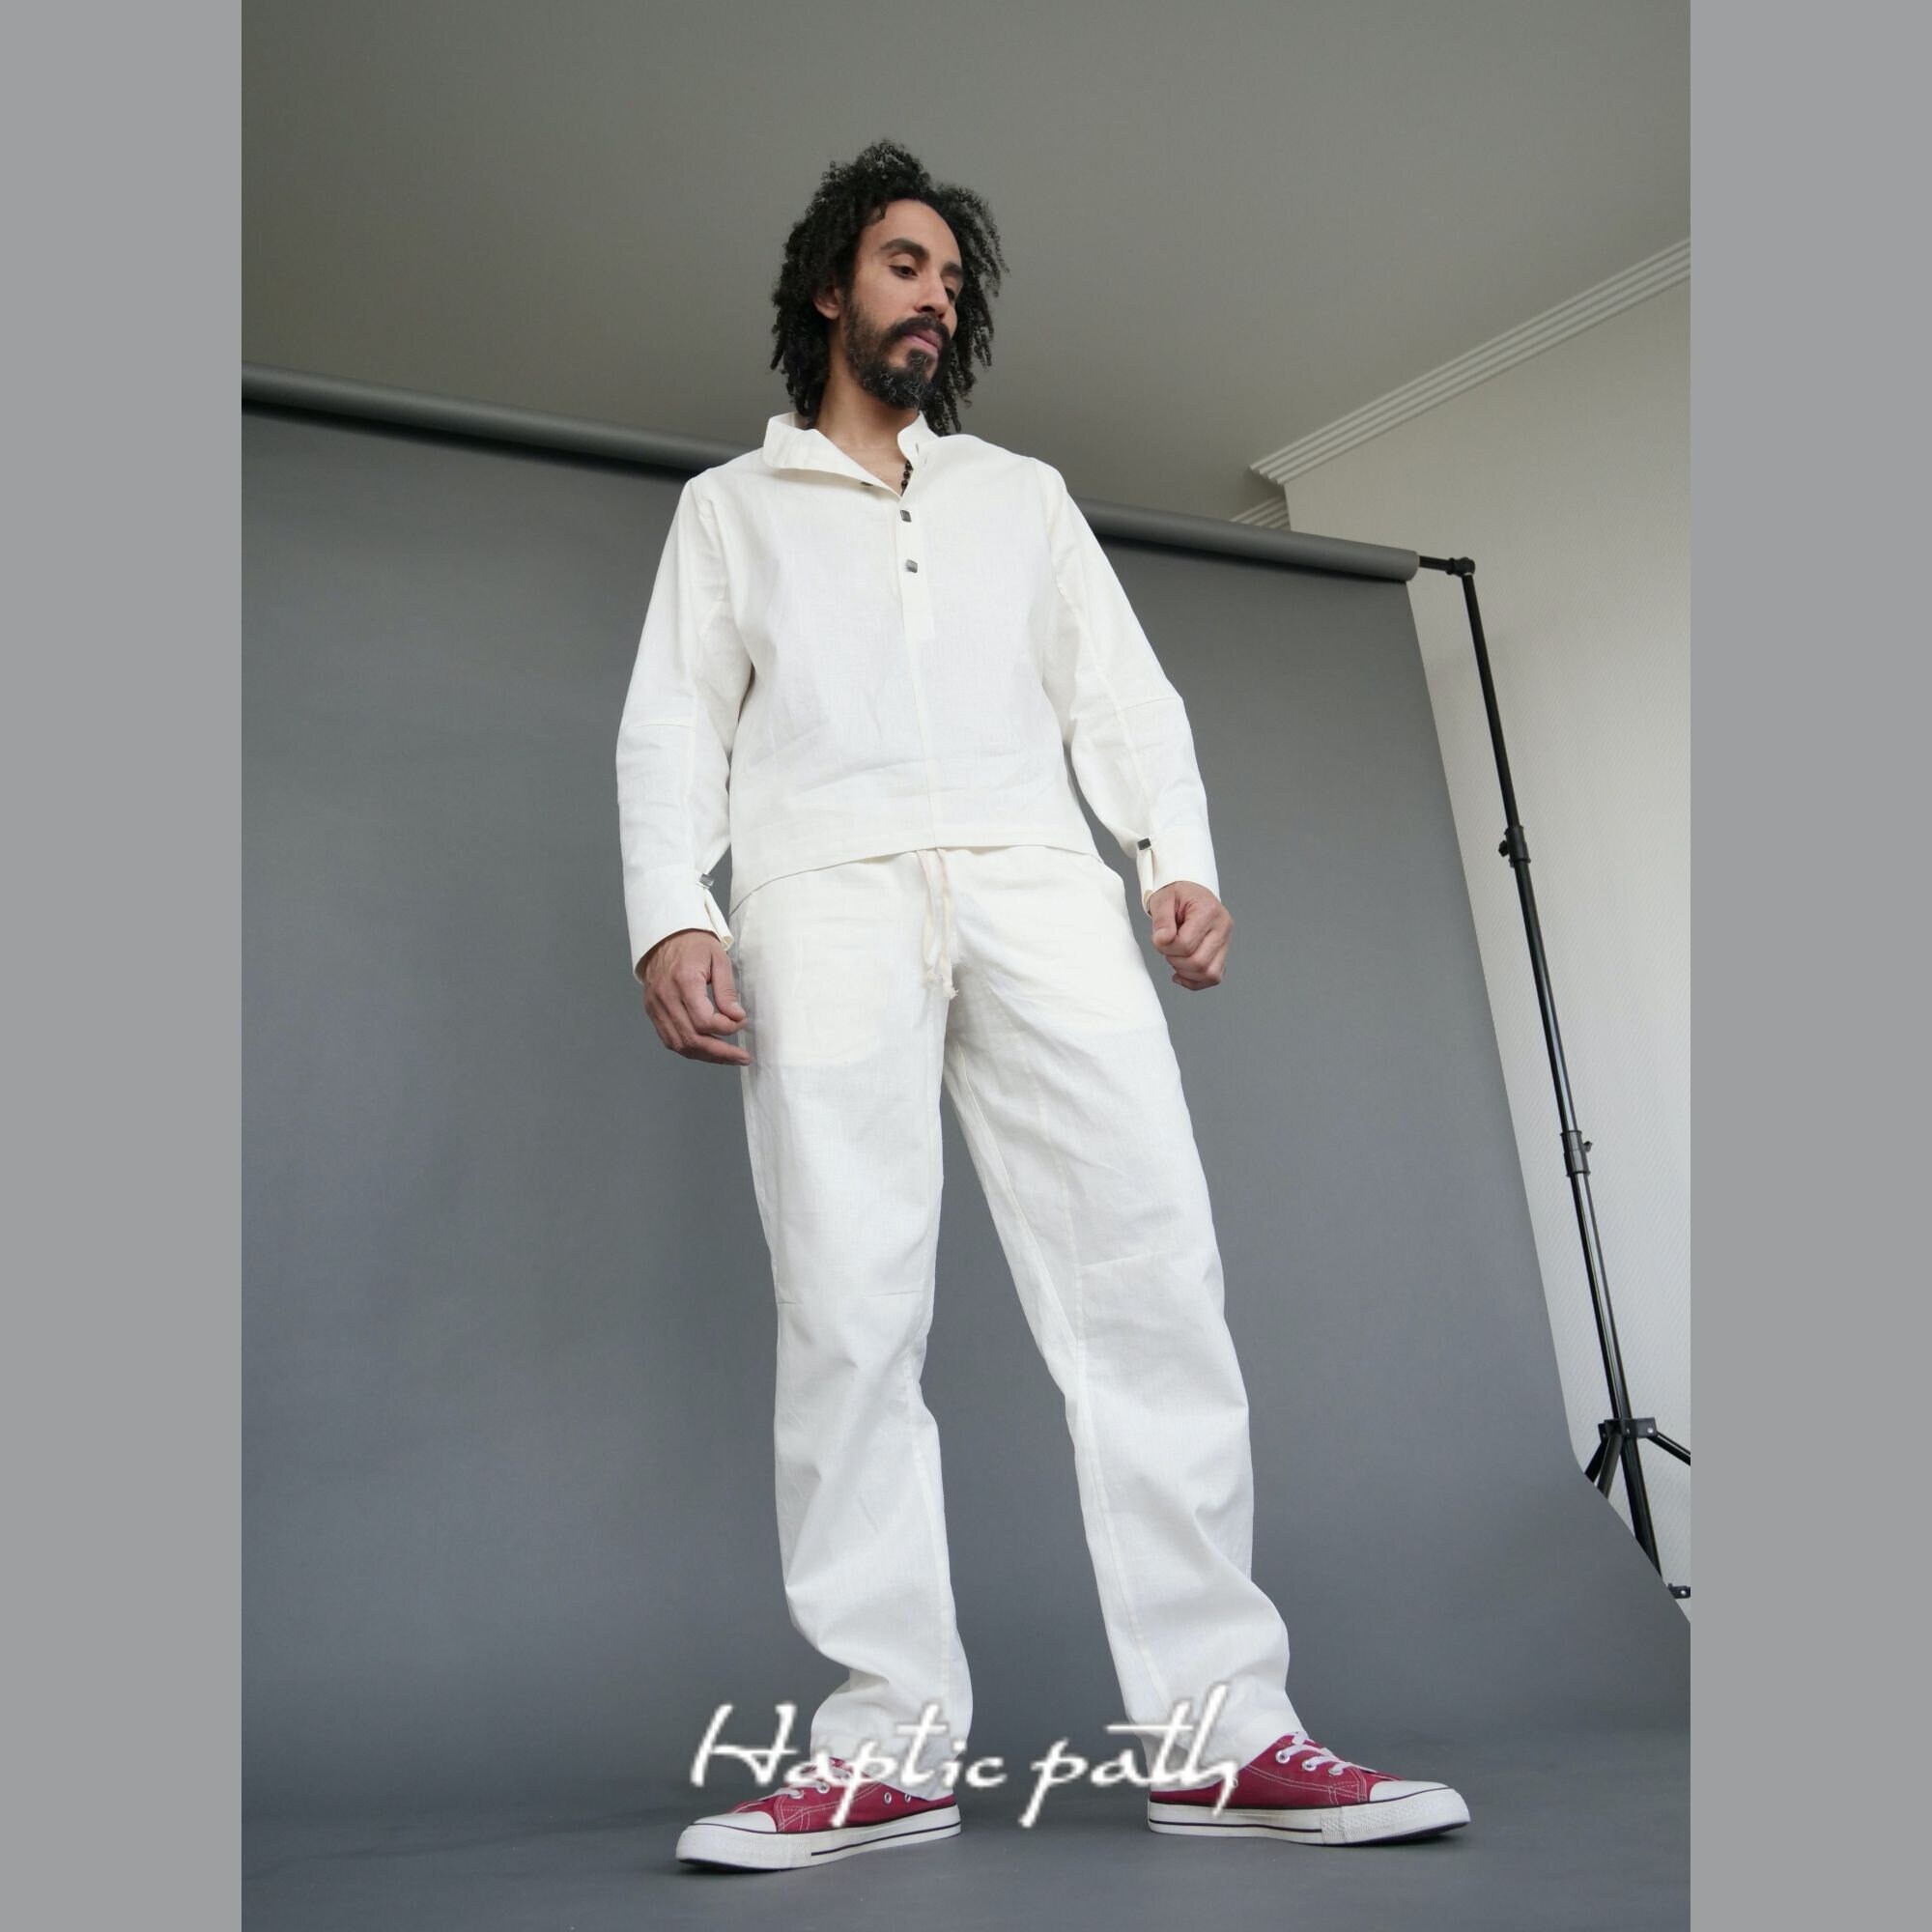 Off-white Yoga Pants ANDHI Unisex Contact Improvisation Hemp Trousers  Ethical Clothing by Haptic Path 